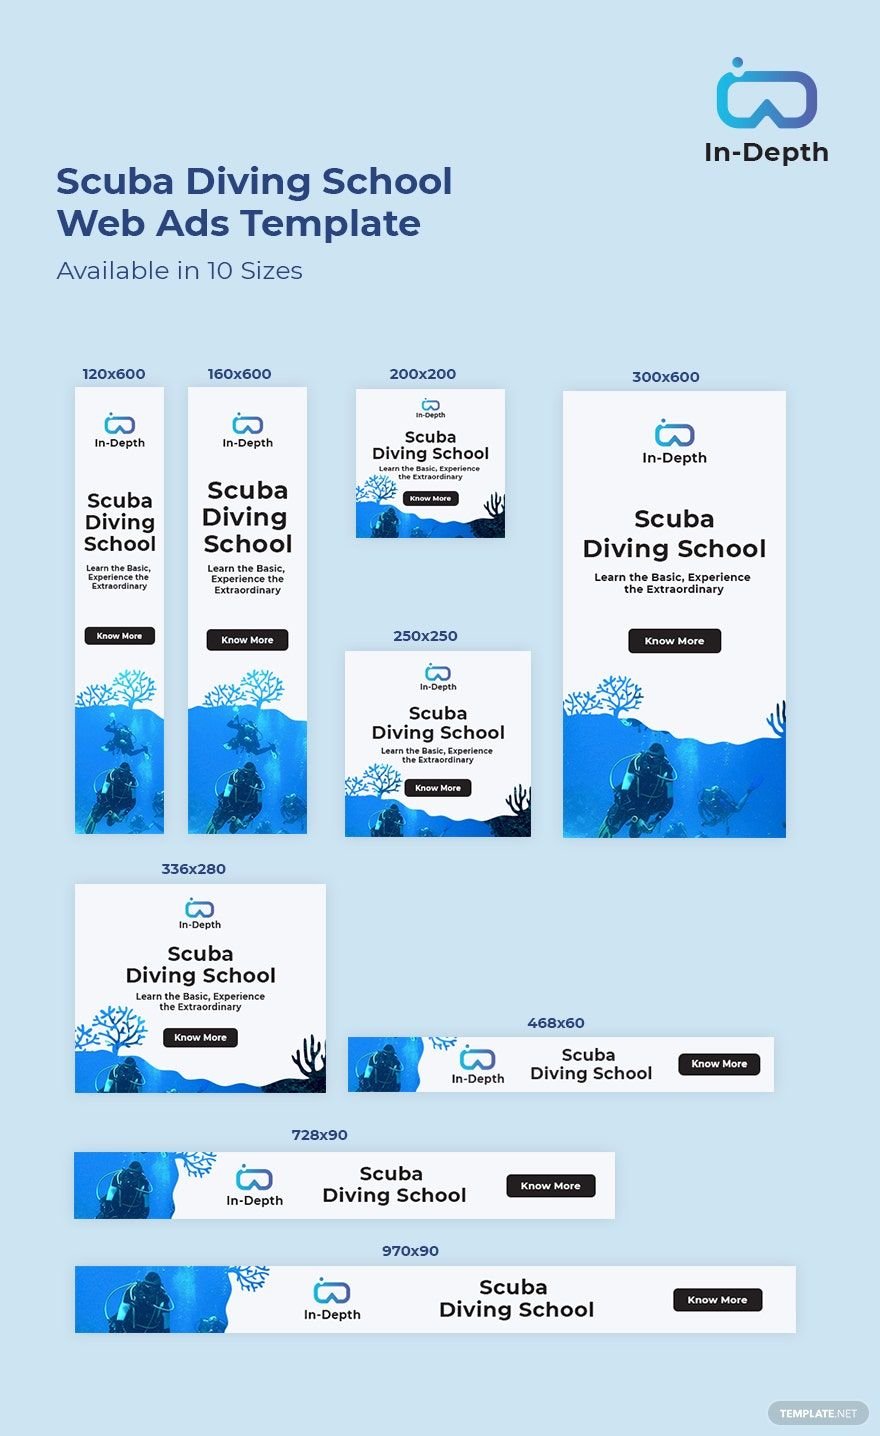 Scuba Diving School Web Ads Template